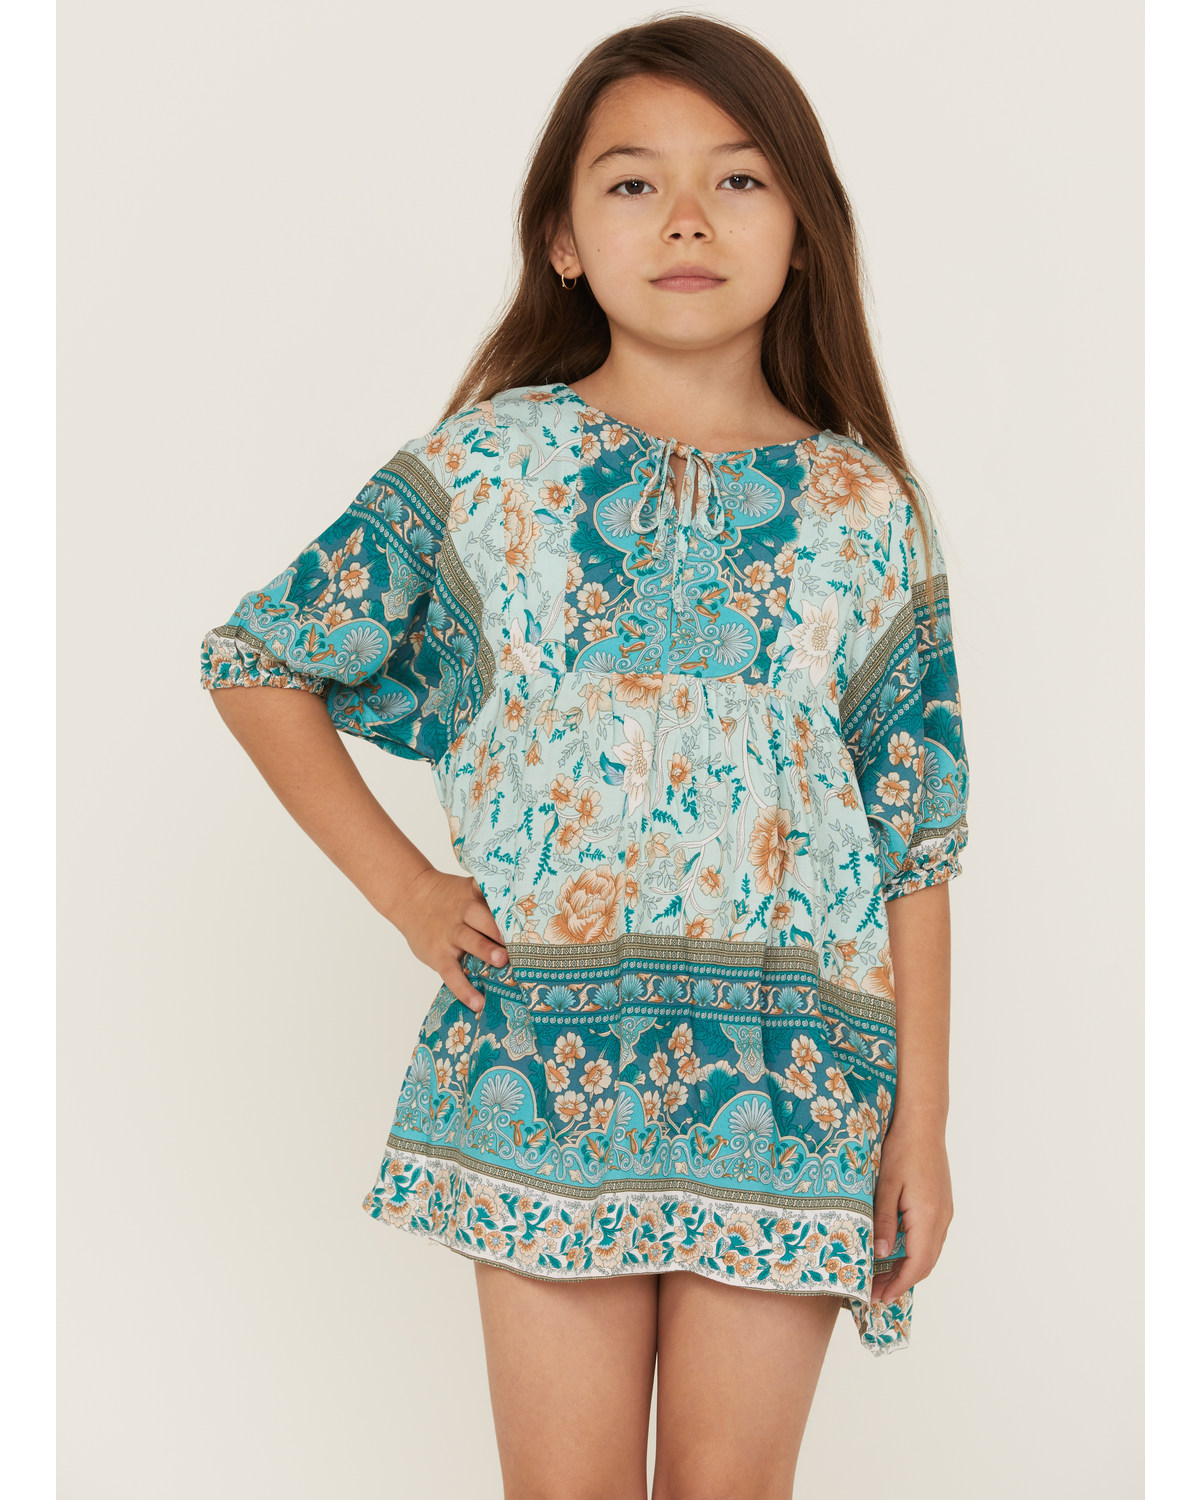 Hayden Girls' Border Print Tunic Turquoise Dress